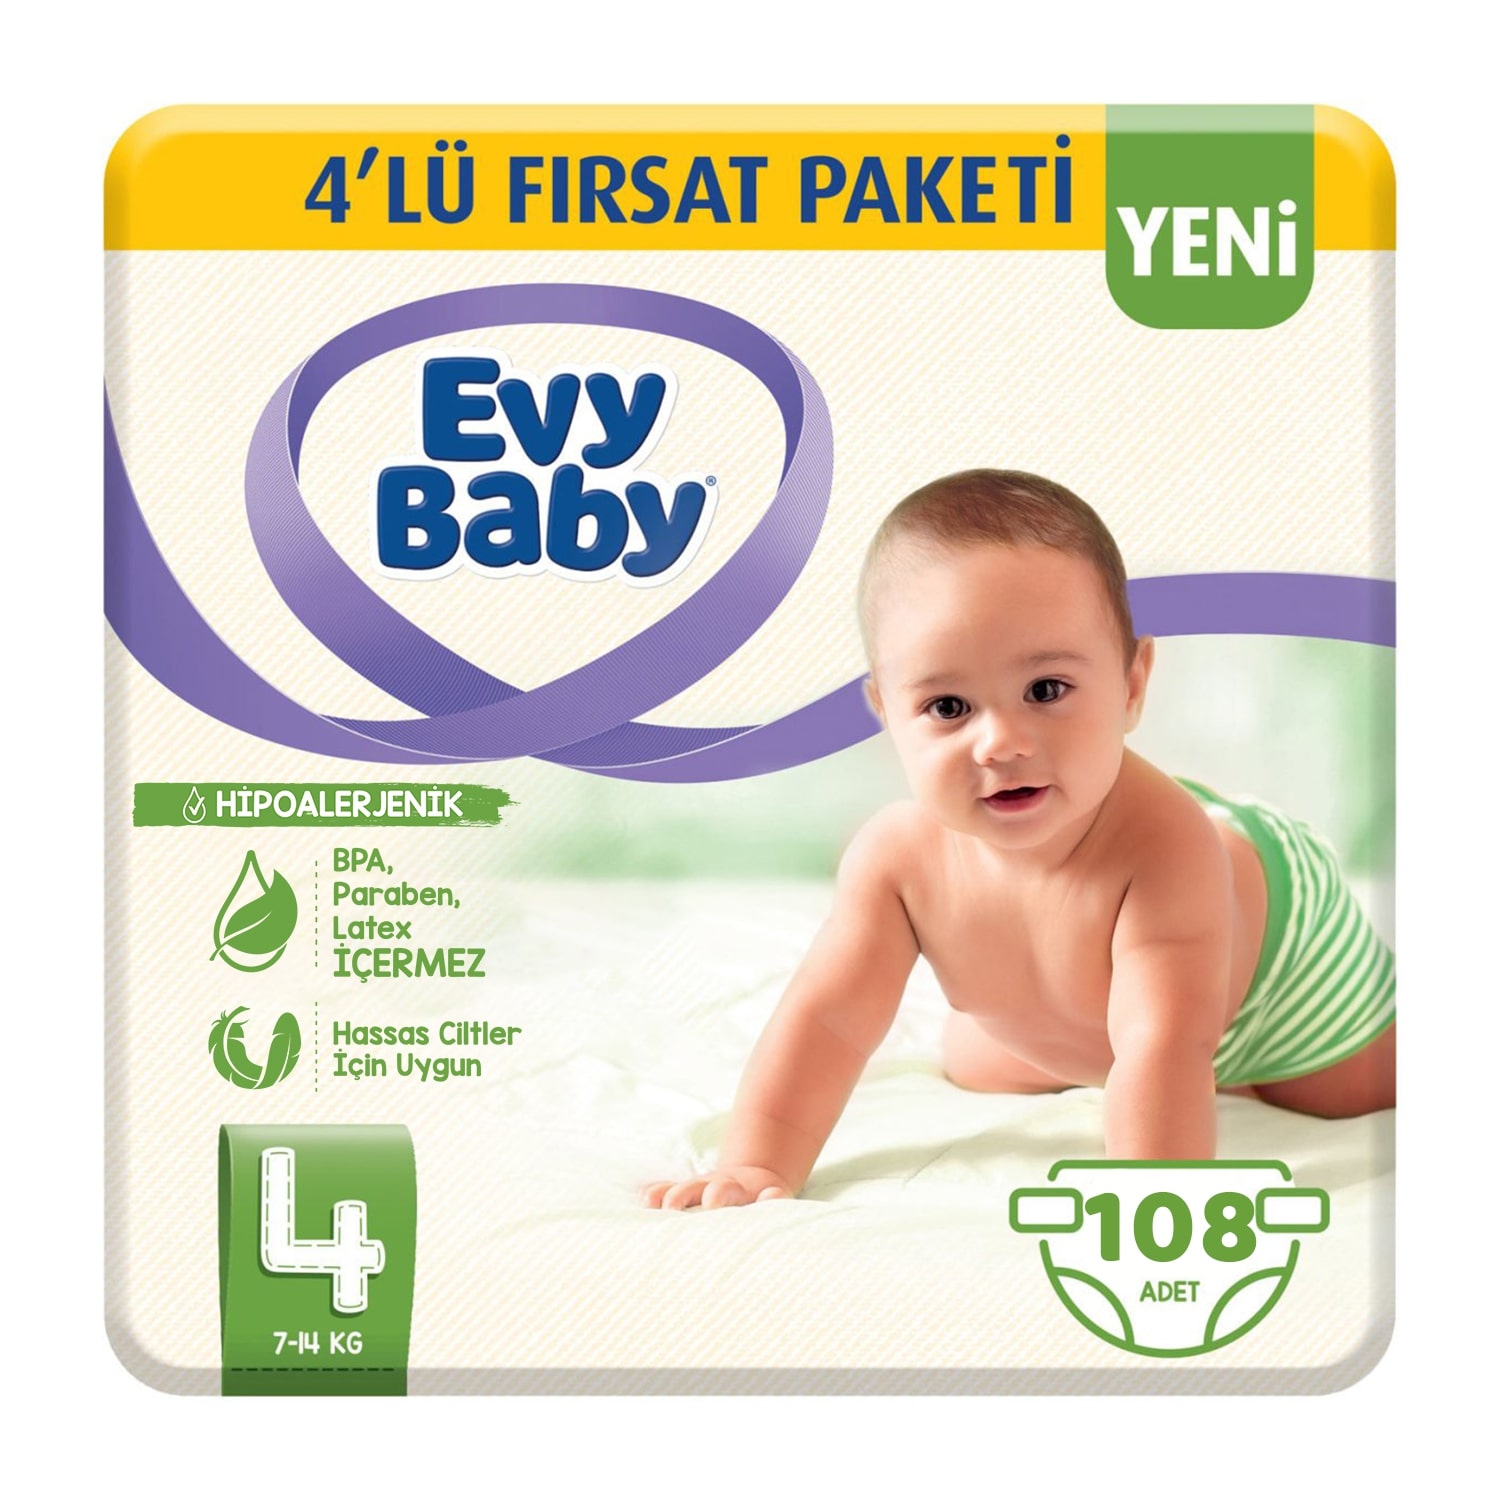 evy baby bebek bezi 4 beden maxi 4 lu firsat paketi 108 adet yeni fiyati evyap